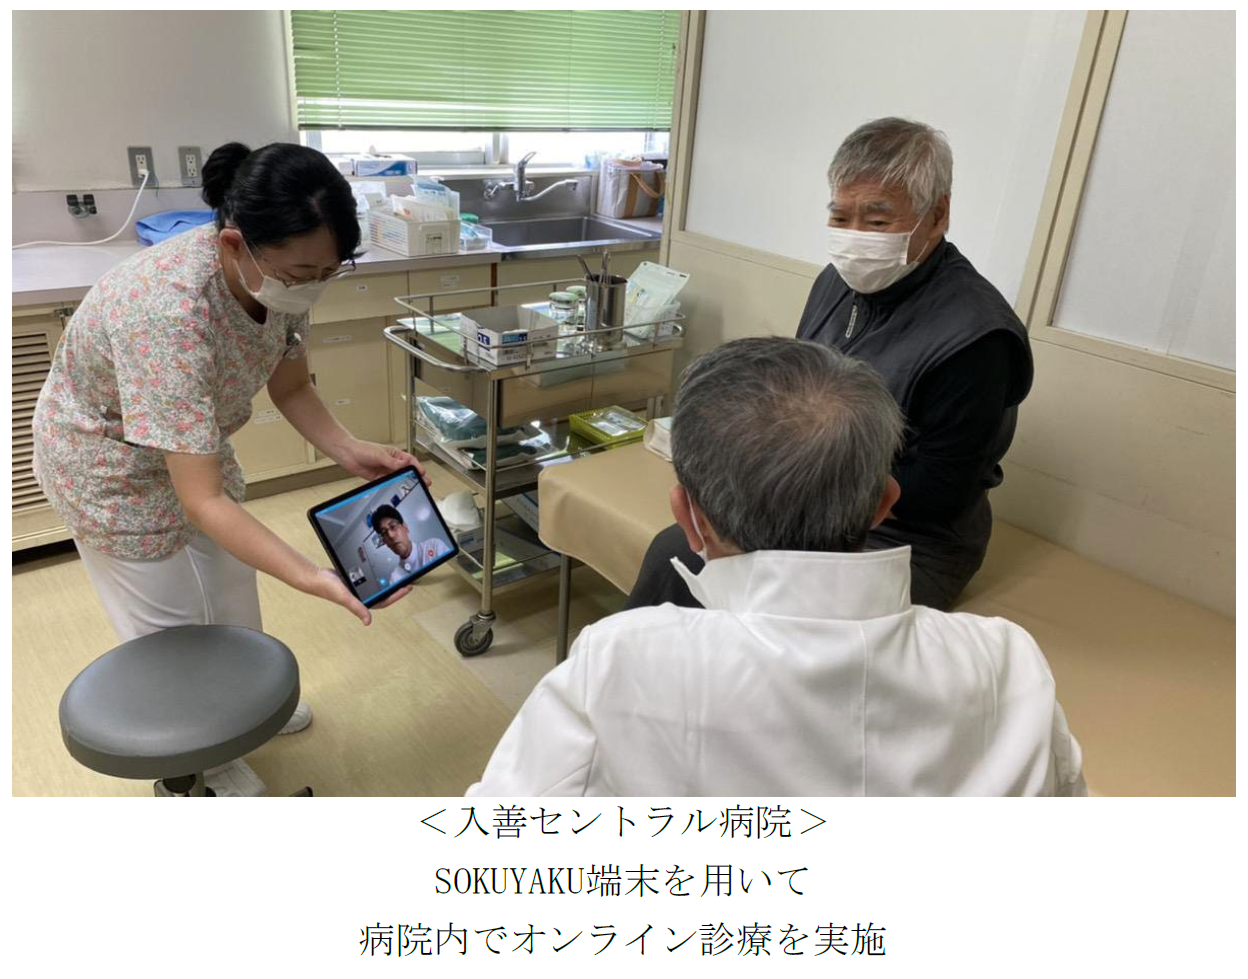 「SOKUYAKU」、富山県 入善セントラル病院と連携。遠隔診療体制の構築を支援し、千葉県の病院との医師のシェアリングを実現〜院内オンライン診療システムを開発し、地域医療体制の強化を支援〜のイメージ